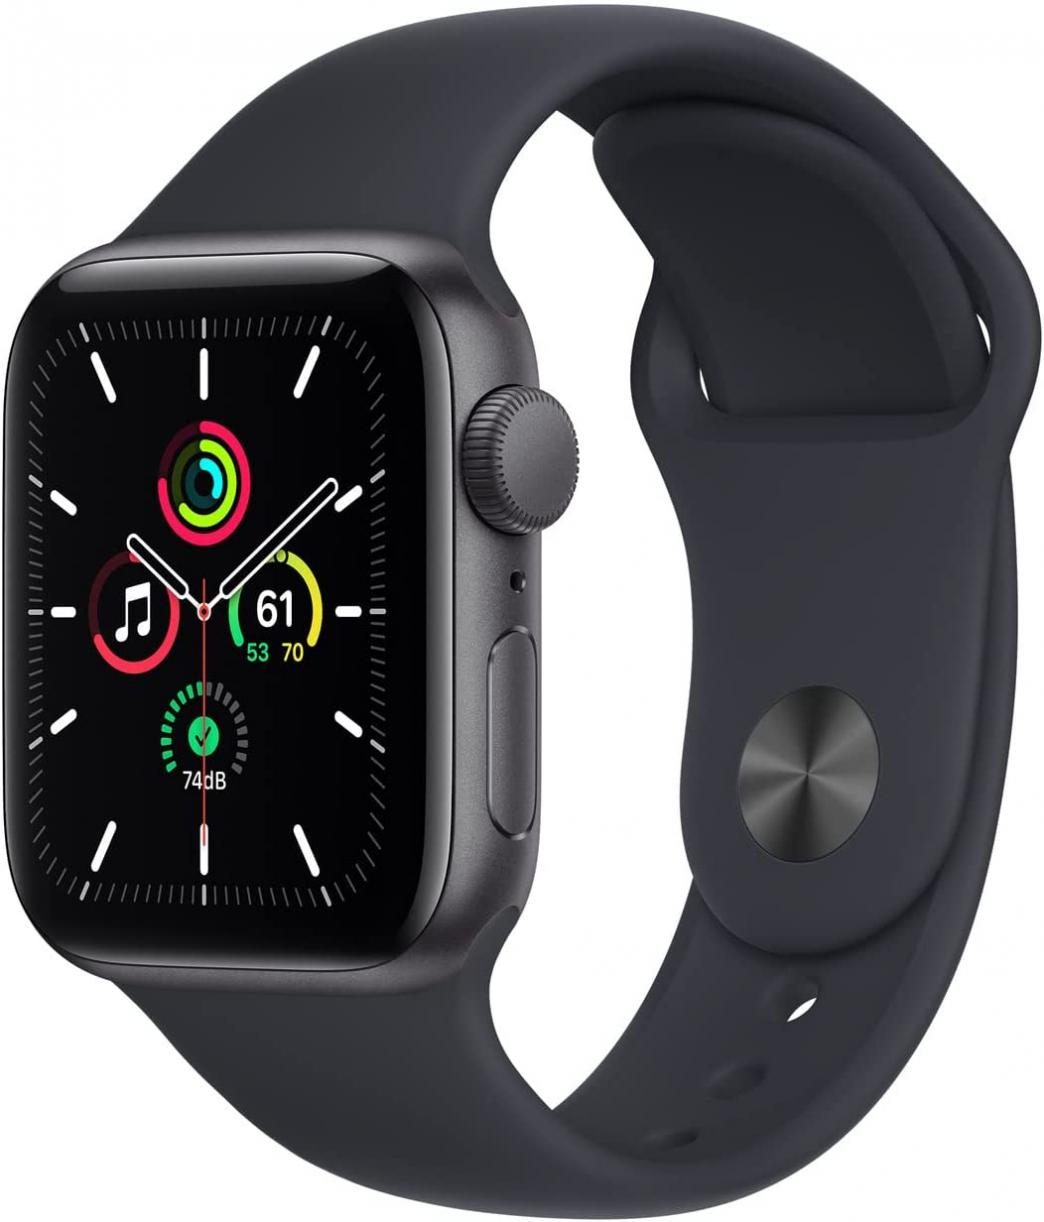 Apple Watch SE (GPS, 44mm) - Space Gray Aluminum Case with Black Sport Band (Renewed Premium)